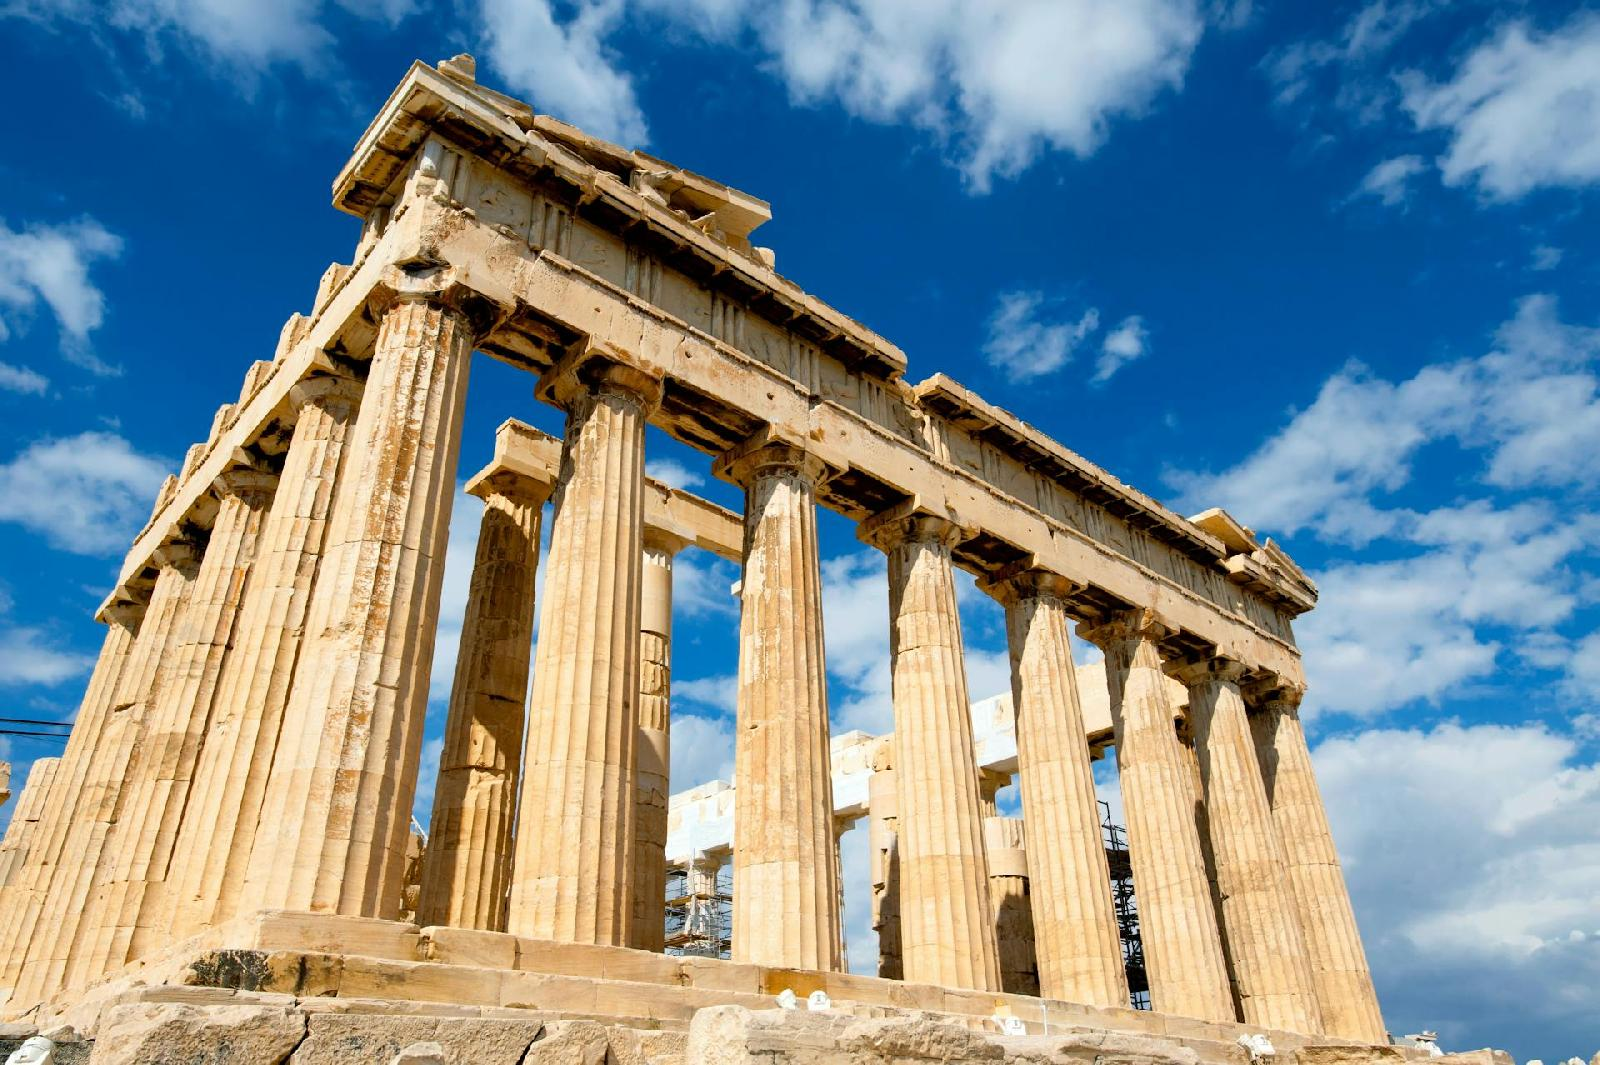 Le guide ultime pour savoir ou aller en grece en septembre